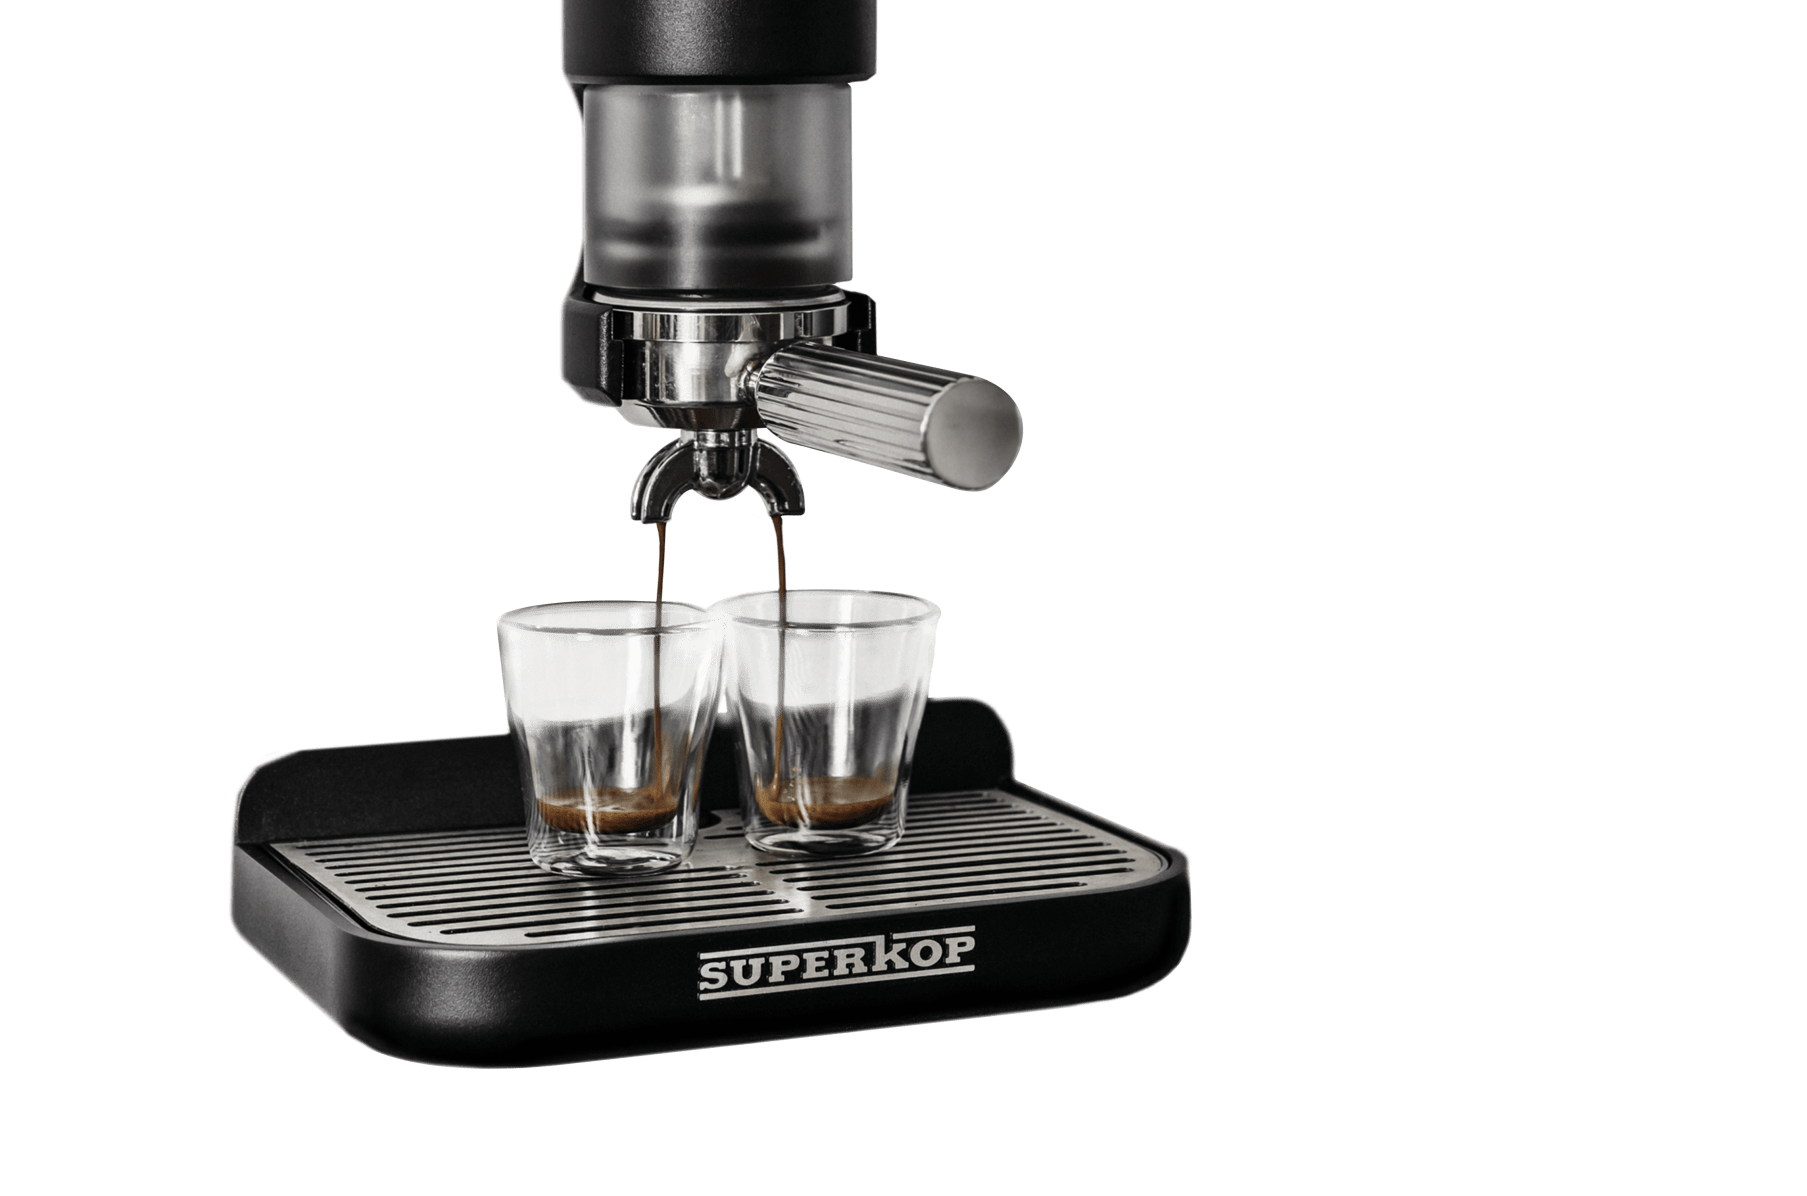 Superkop non-electric espresso tool